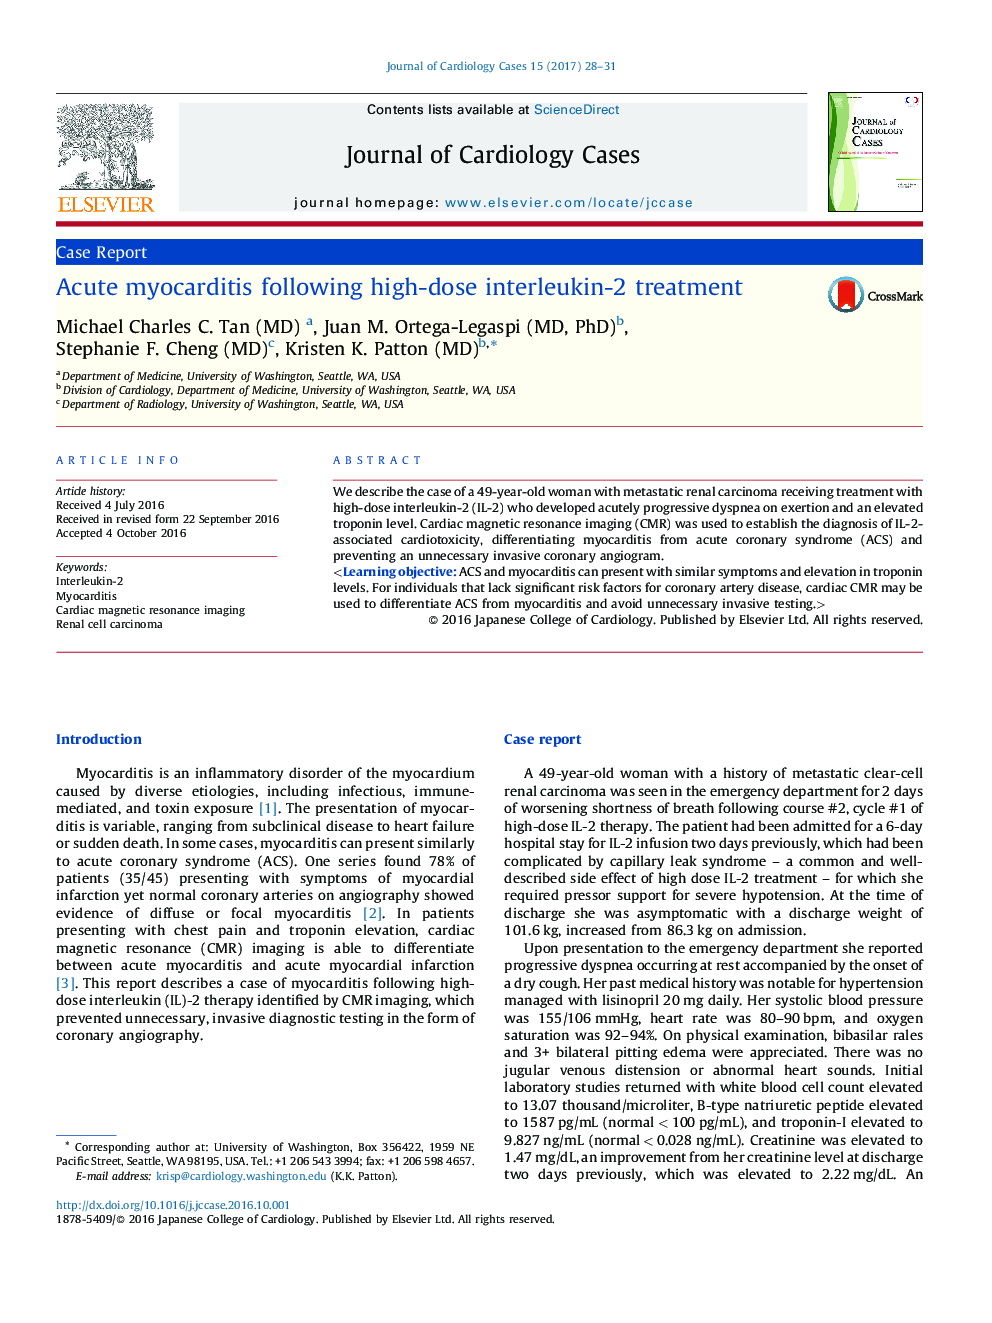 Acute myocarditis following high-dose interleukin-2 treatment